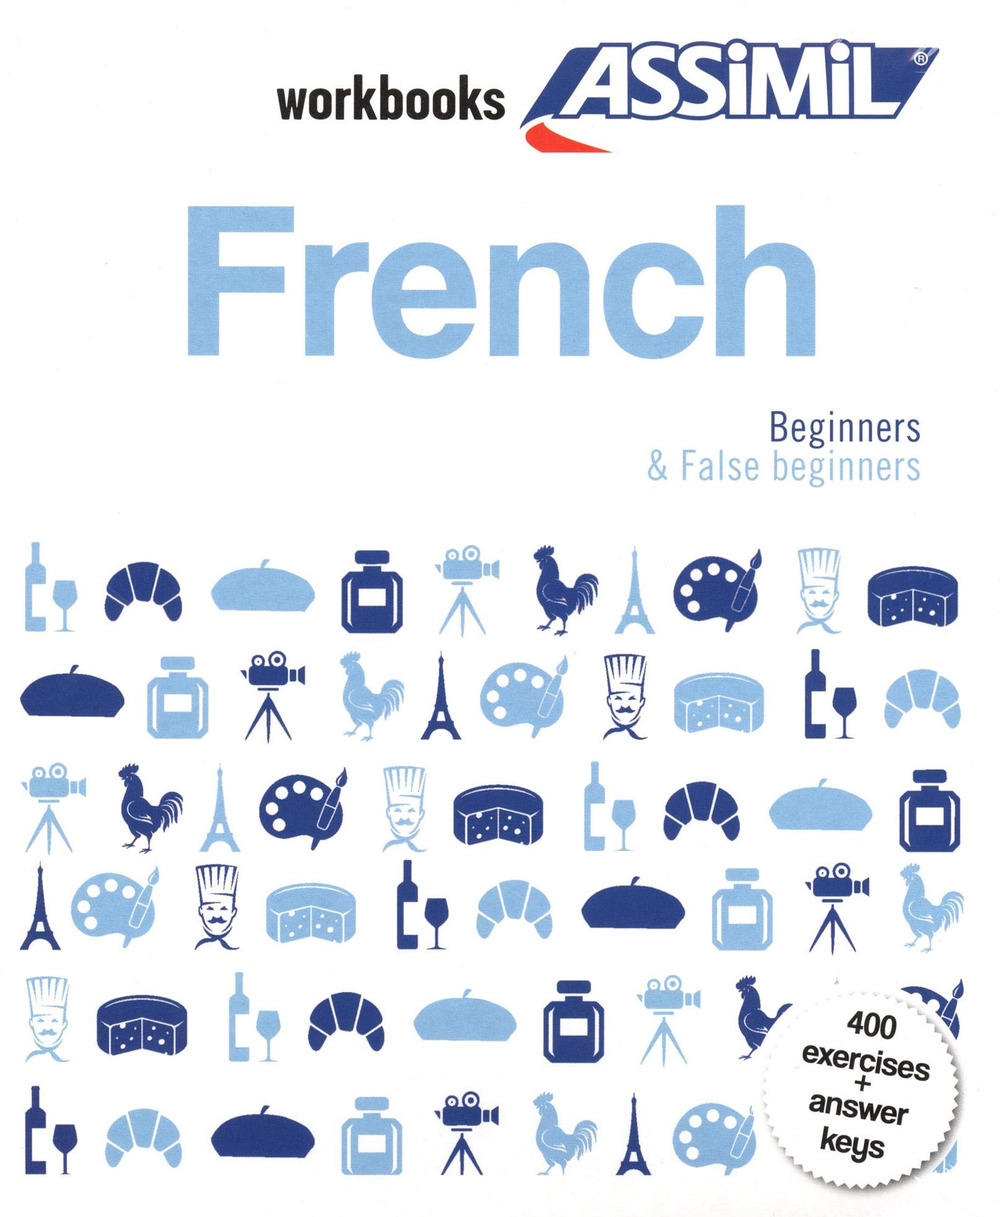 French. Workbook. False beginners